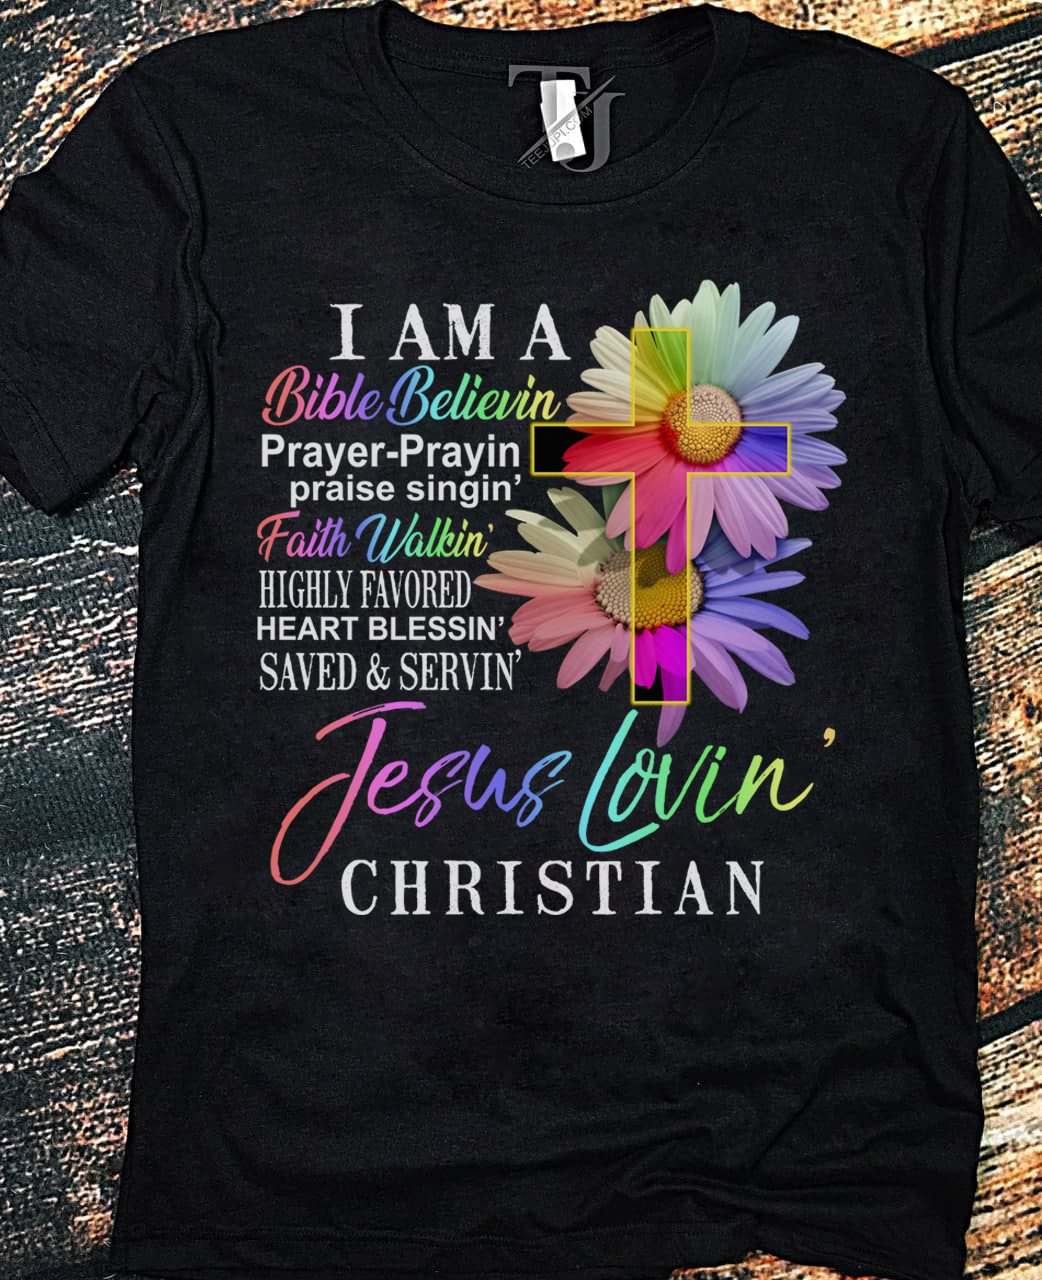 I am a bible believin prayer-prayin - Jesus lovin Christian